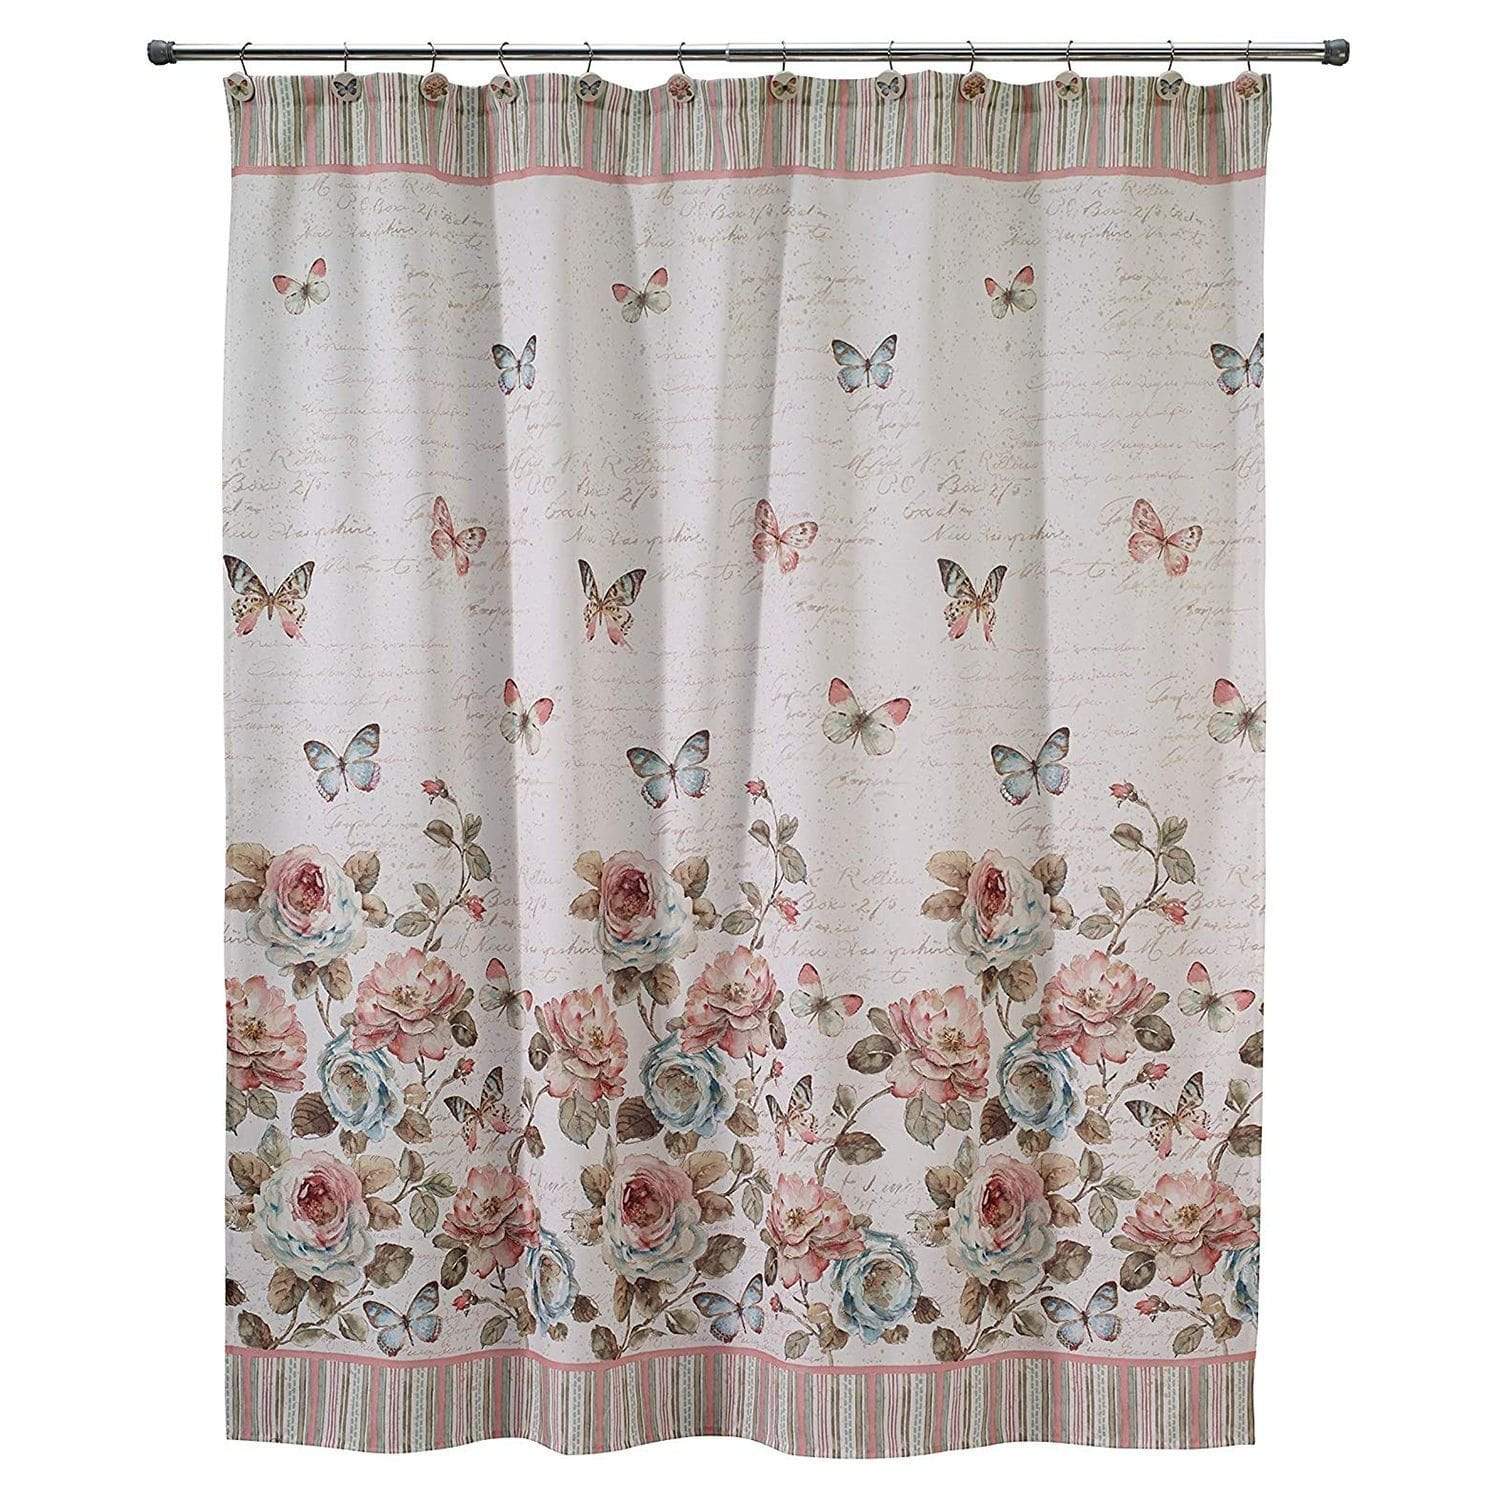 Avanti Butterfly Garden Shower Curtain - Multicolour - 13882H - Jashanmal Home